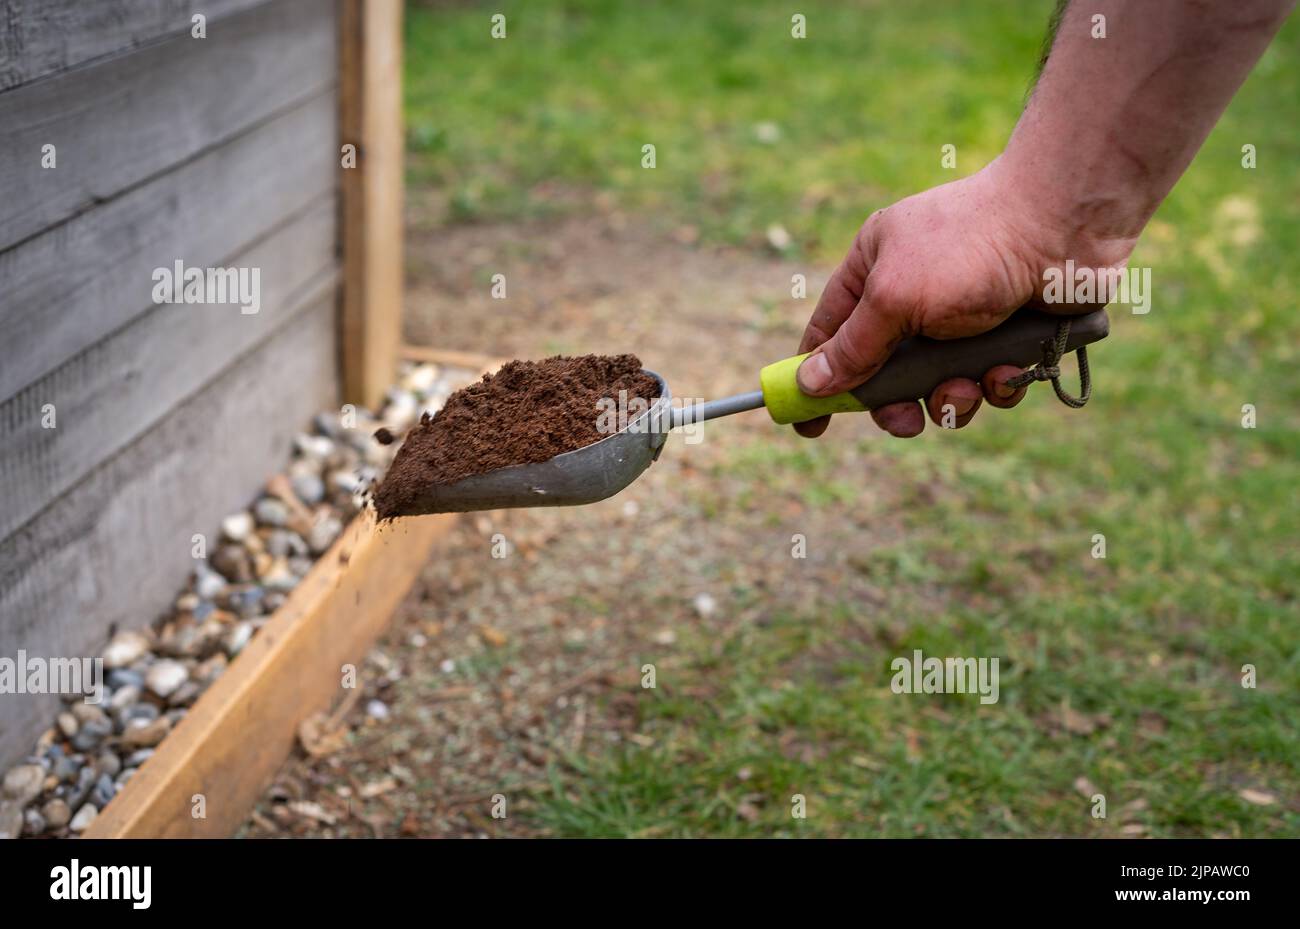 Male gardener holding scoop trowel full of soil above the grass. Spreading soil over bald grass patch. Stock Photo